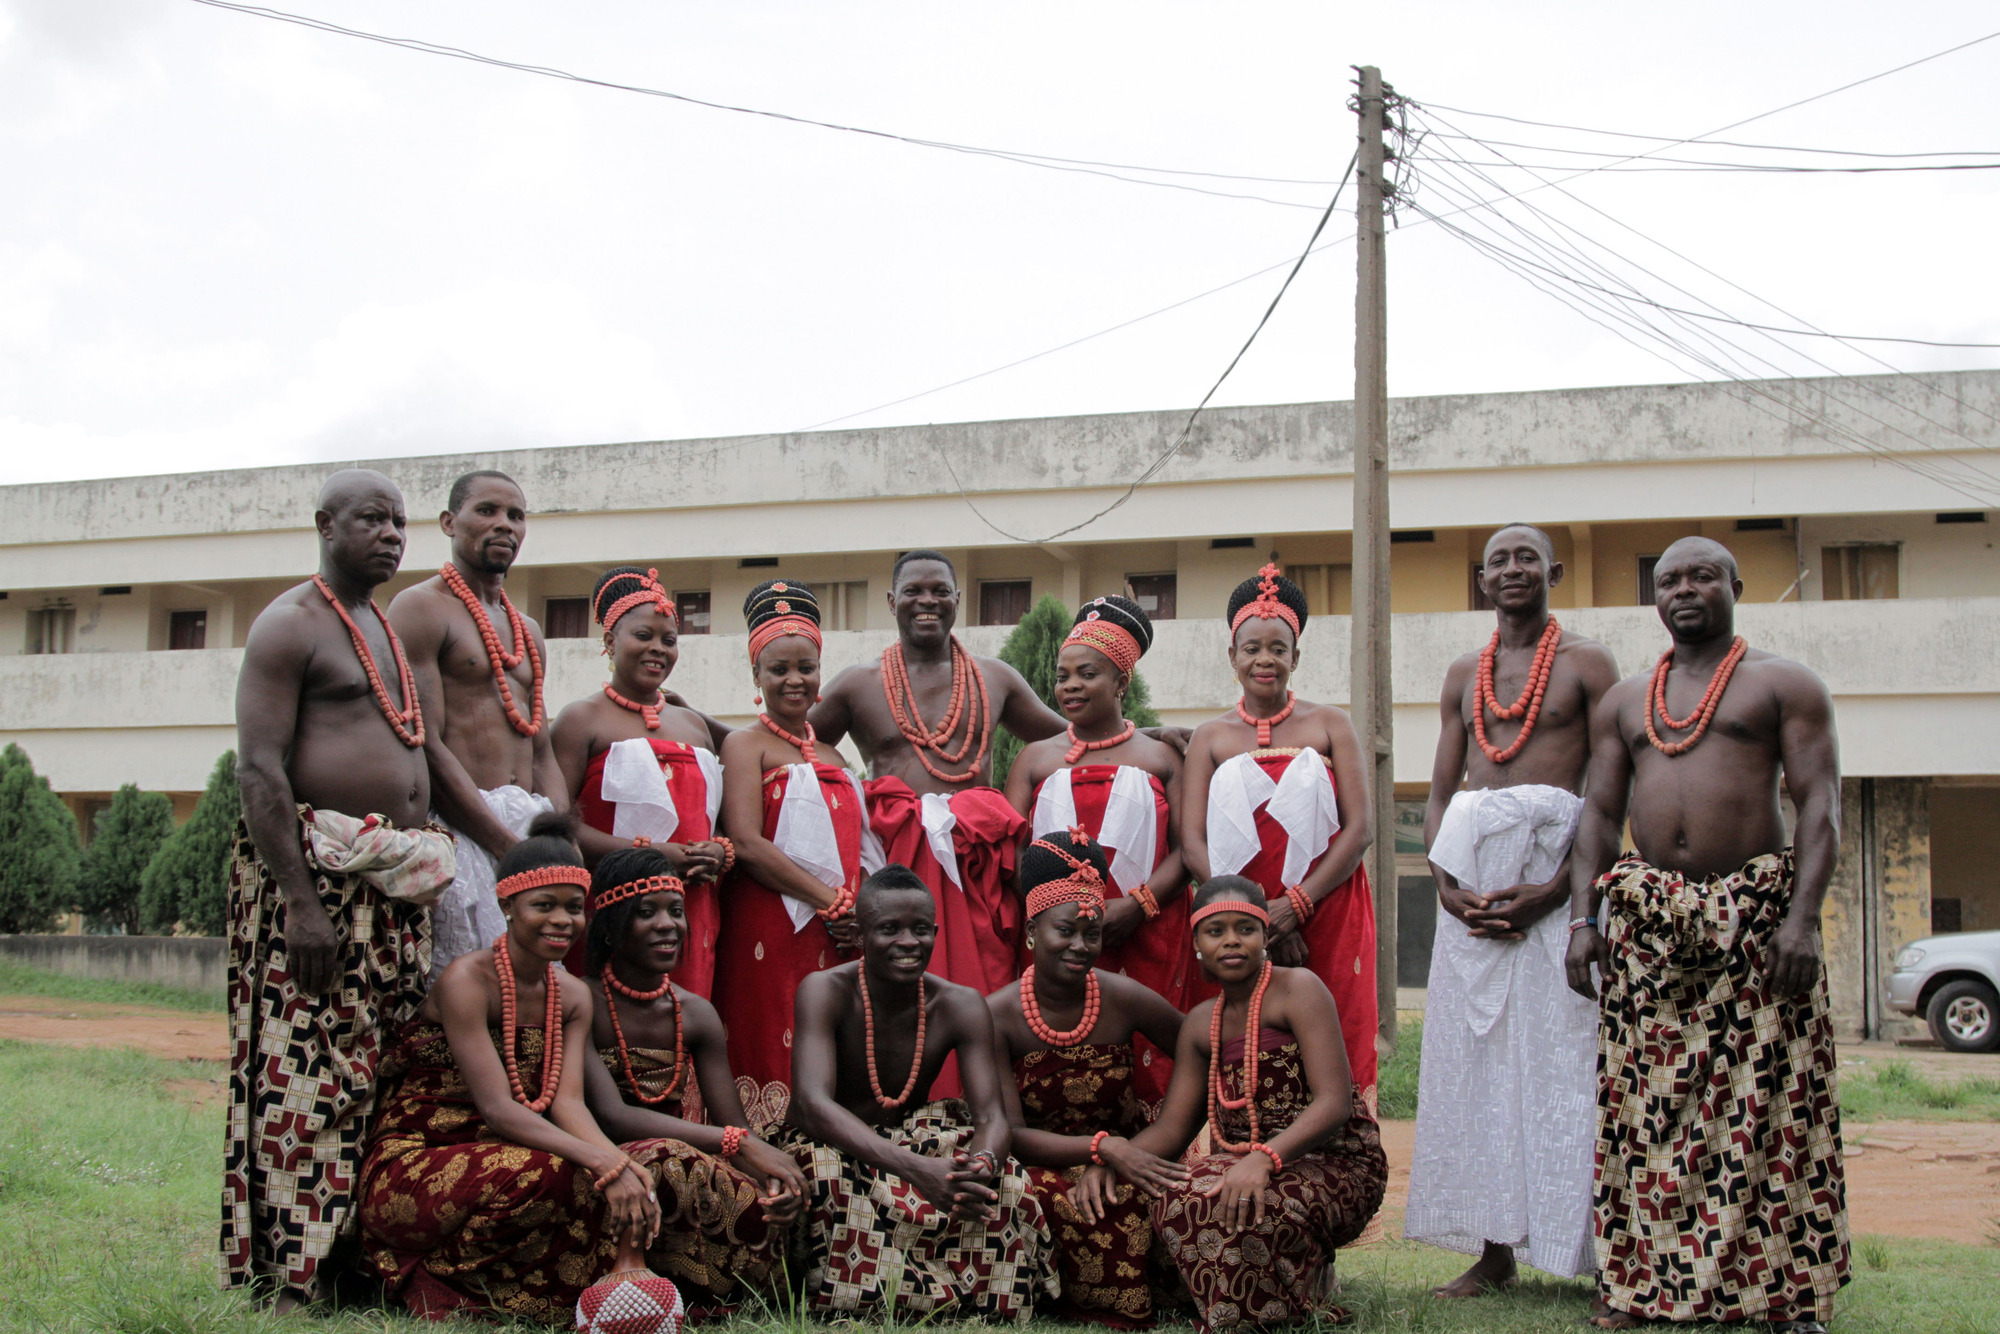 Dancers from Benin City, Nigeria. Photographer: Nutopia